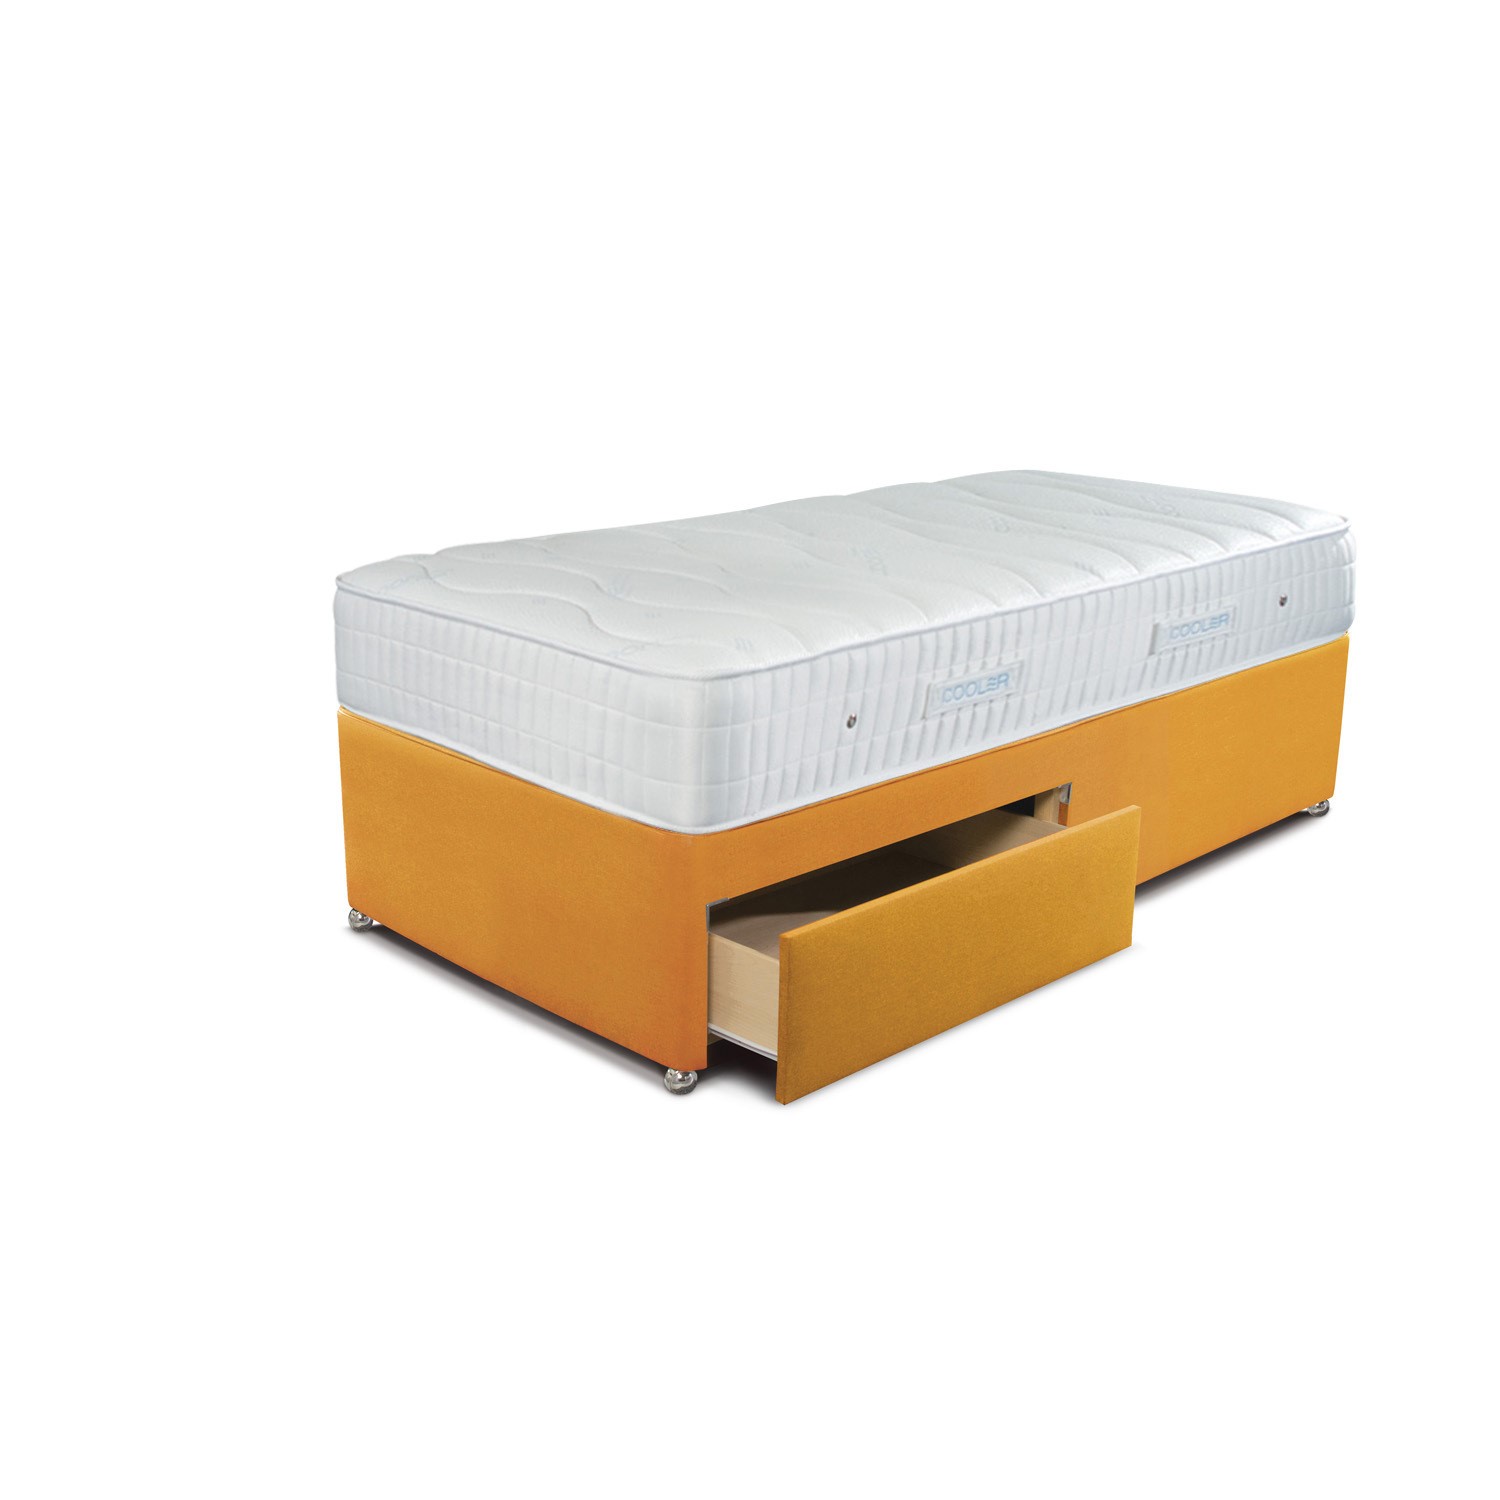 Photo of Sleepeezee single 2 drawer divan bed in tweed mustard with cooler pinnacle 1000 mattress